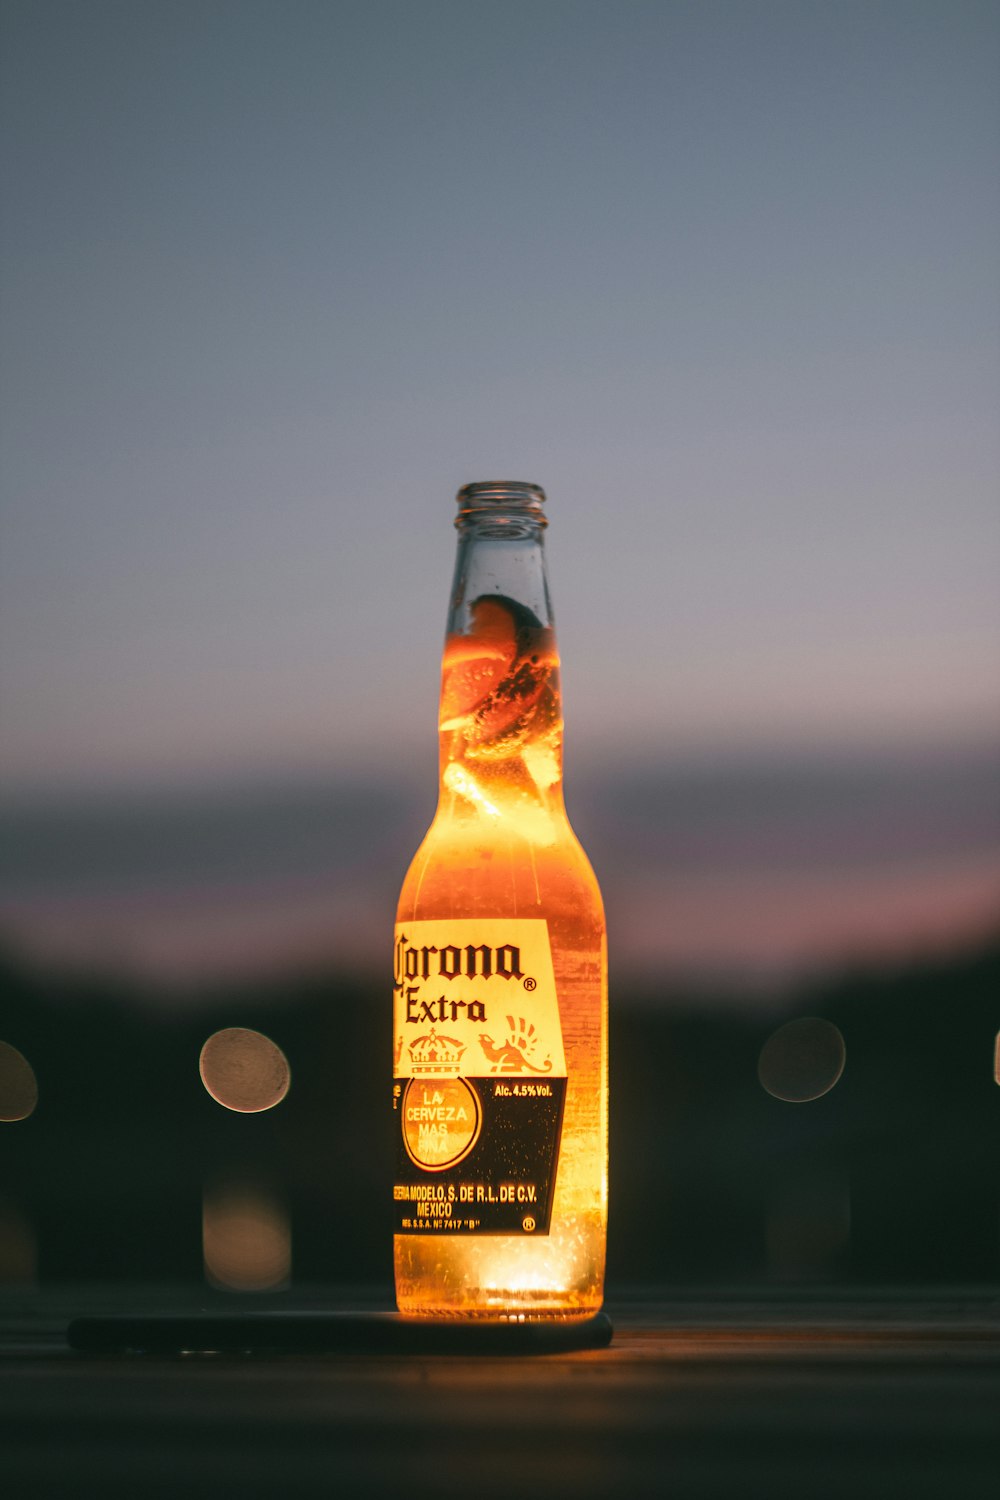 selective focus photography of corona extra bottle